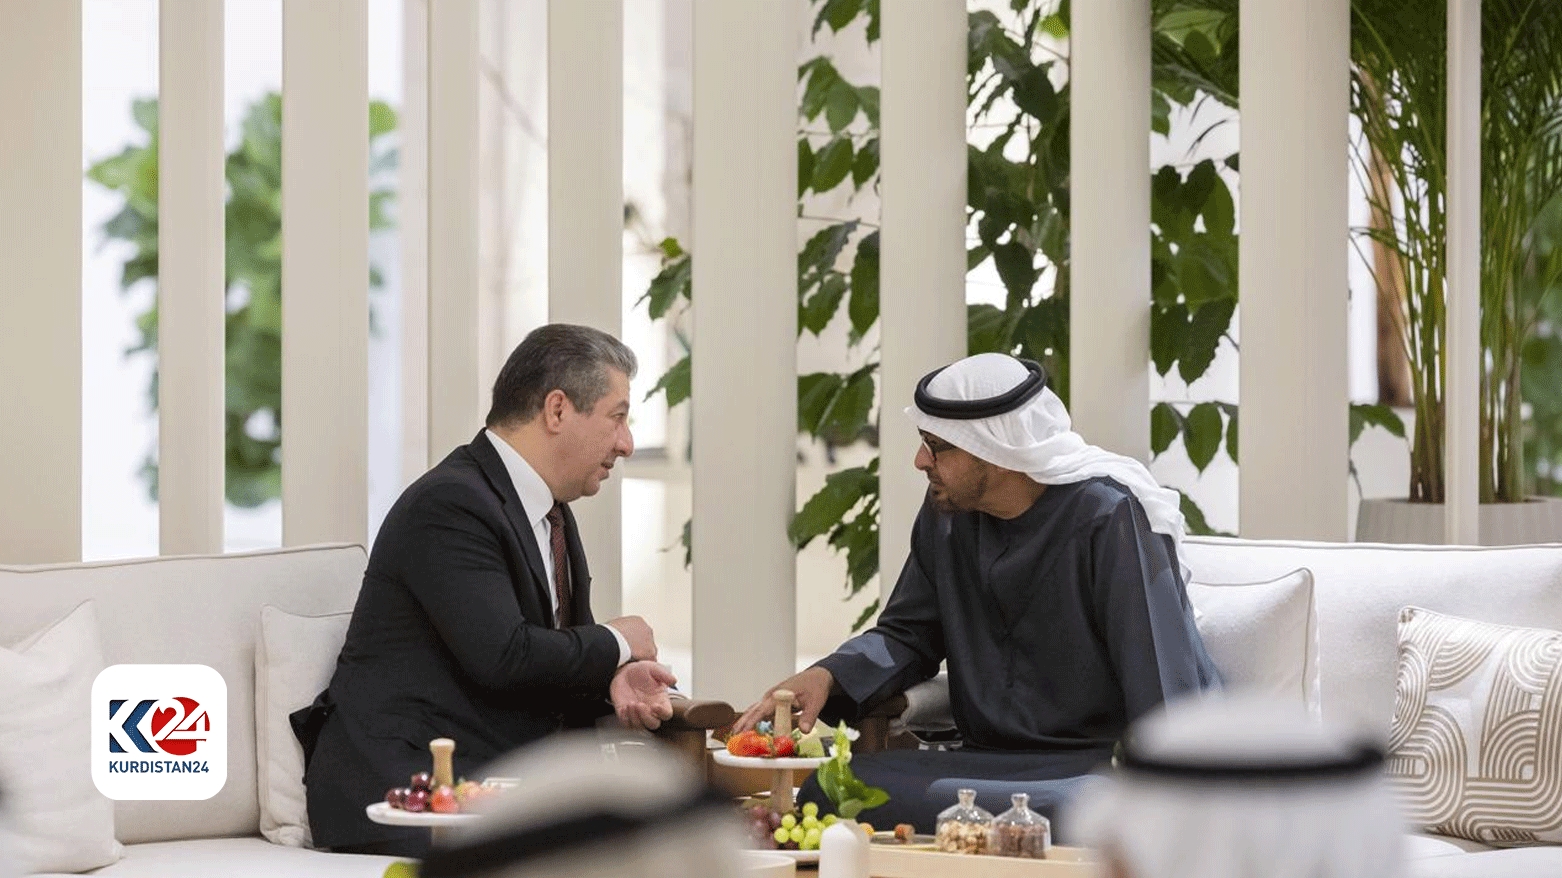 KRG Prime Minister and UAE President Strengthen Ties in Abu Dhabi Meeting